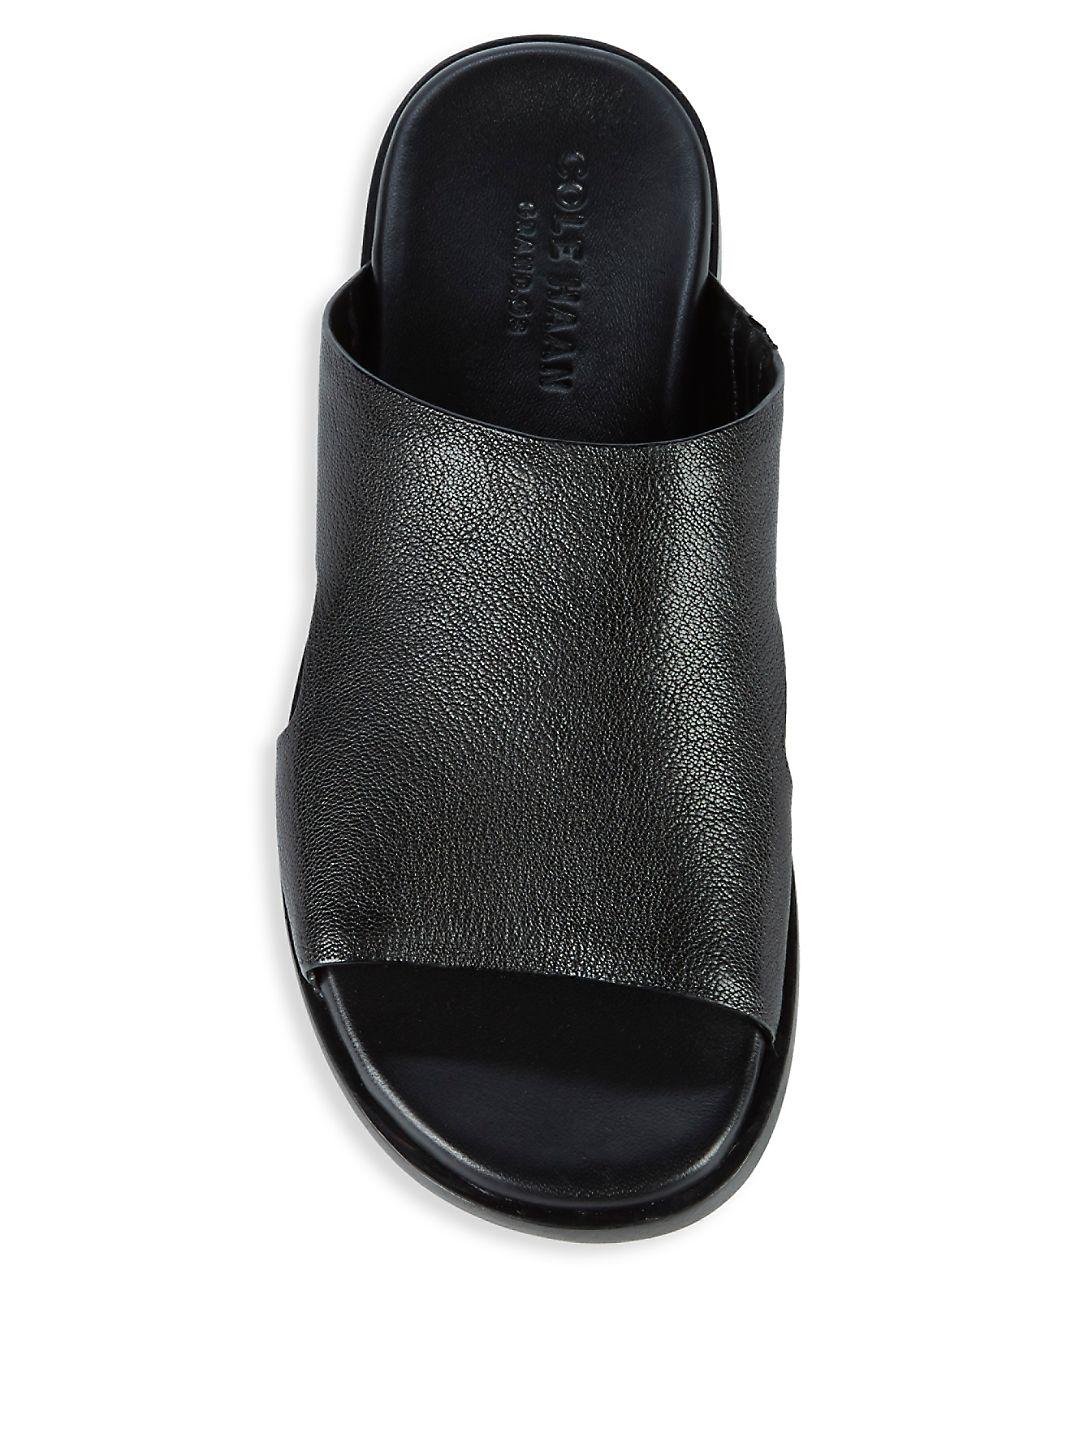 Cole Haan Leather Goldwyn 2.0 Slide Sandals in Black for Men 